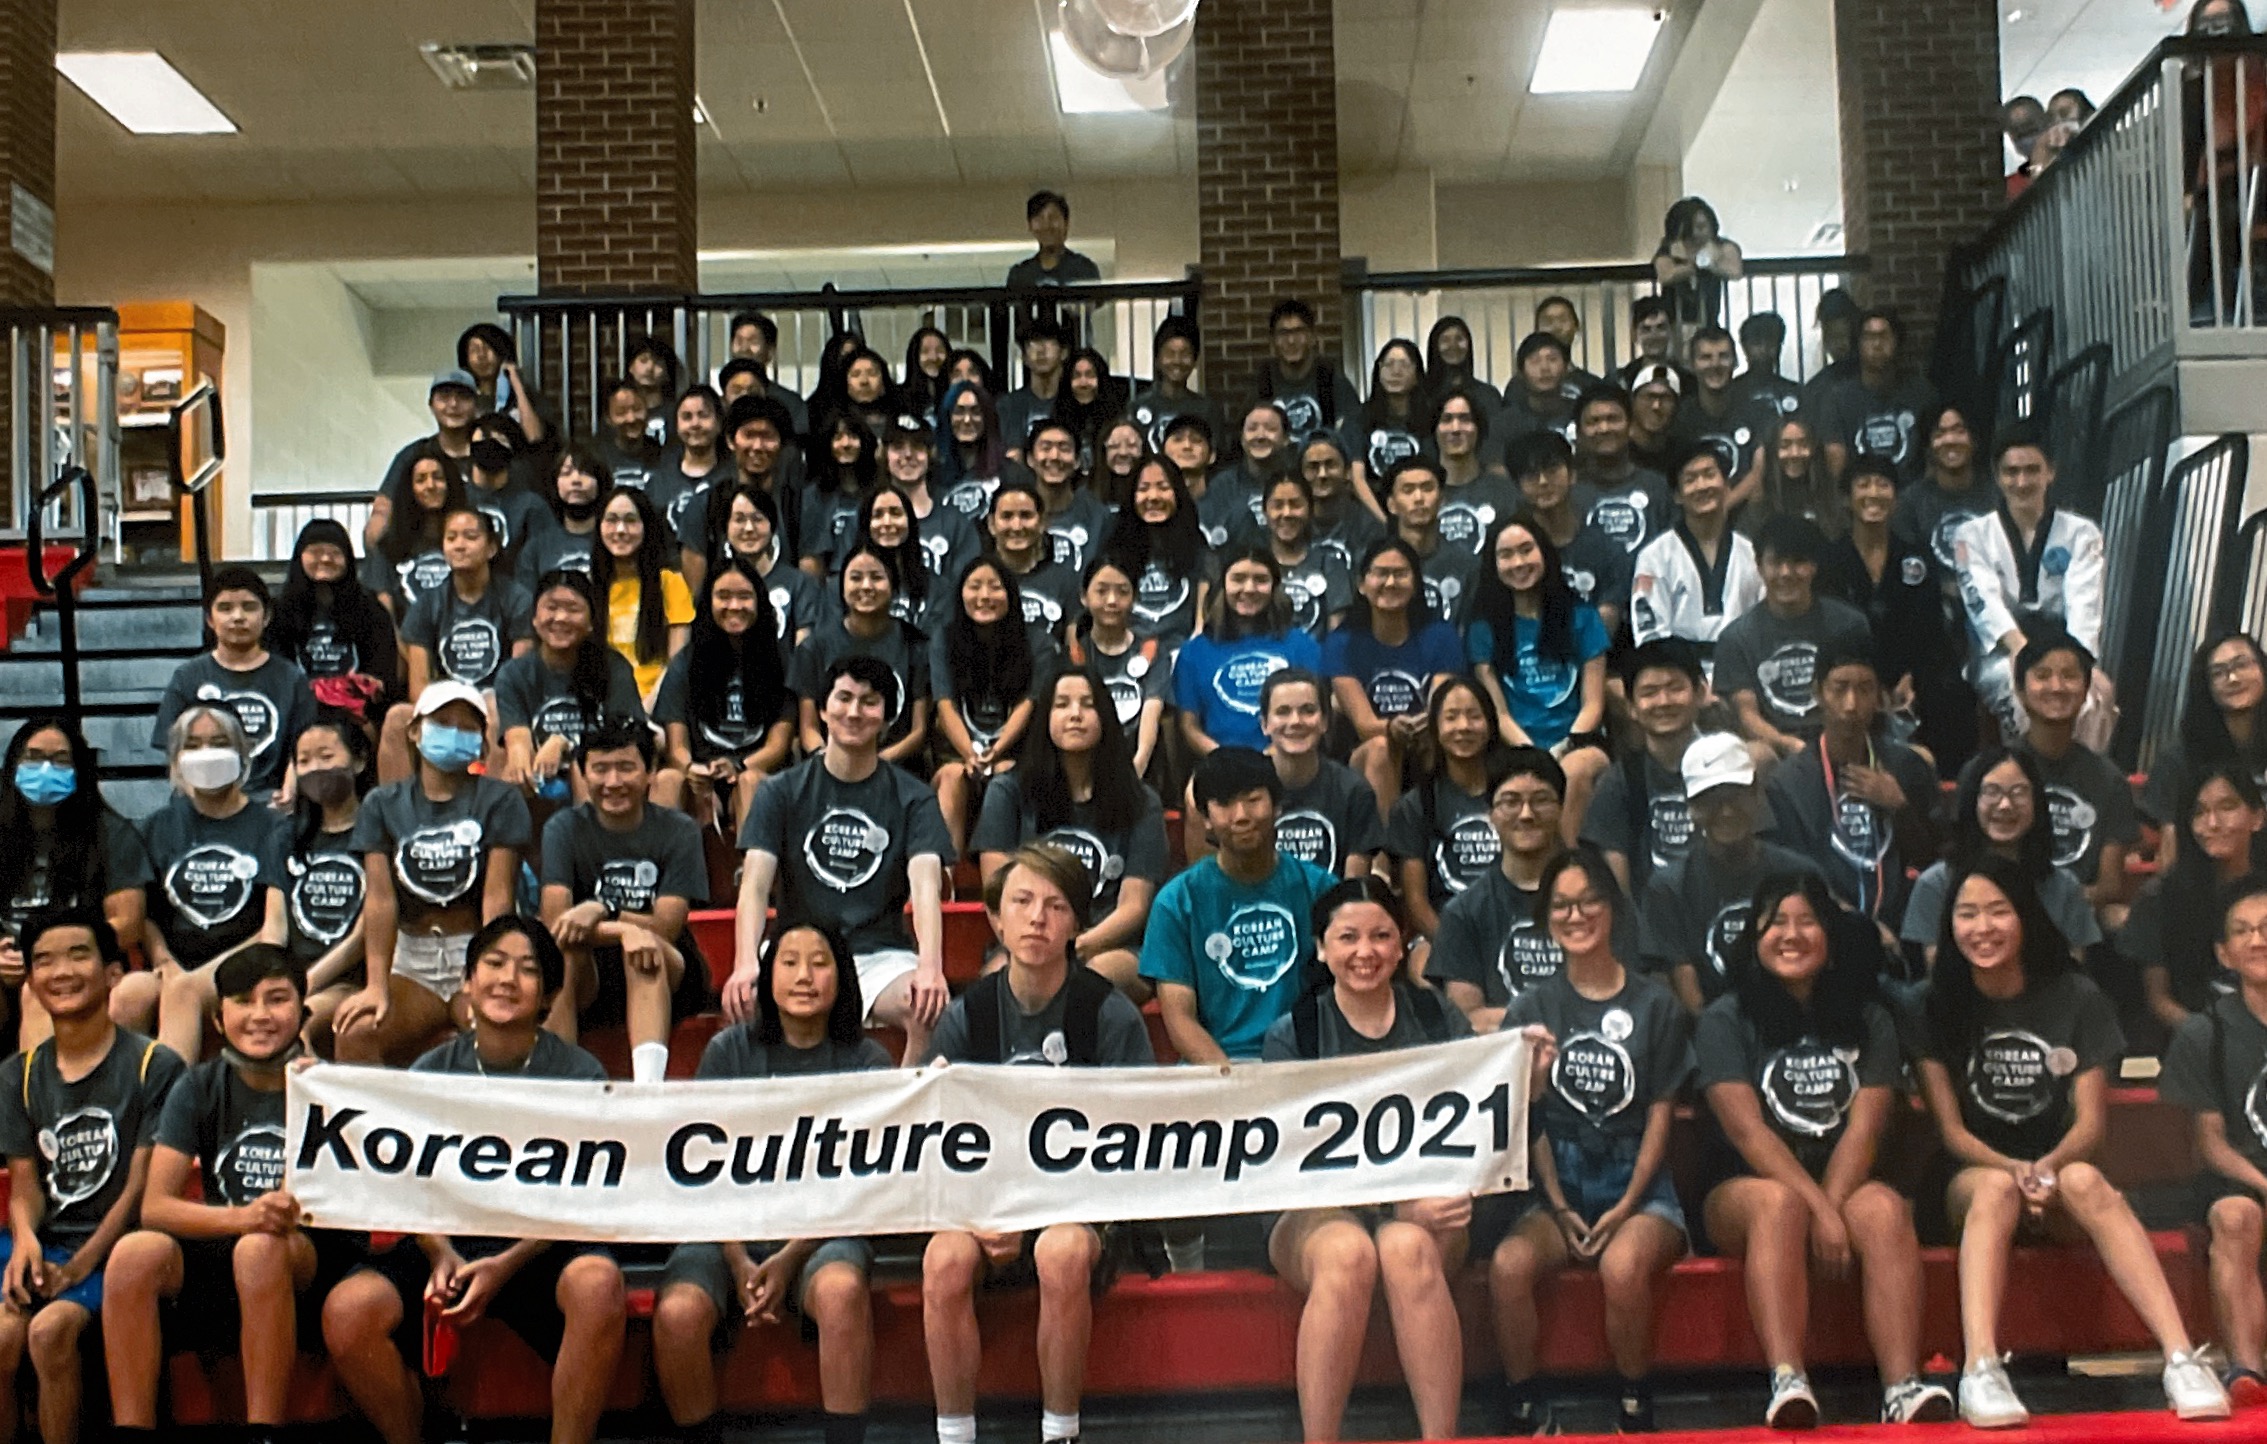 Volunteering for Korean culture camp, 2021!